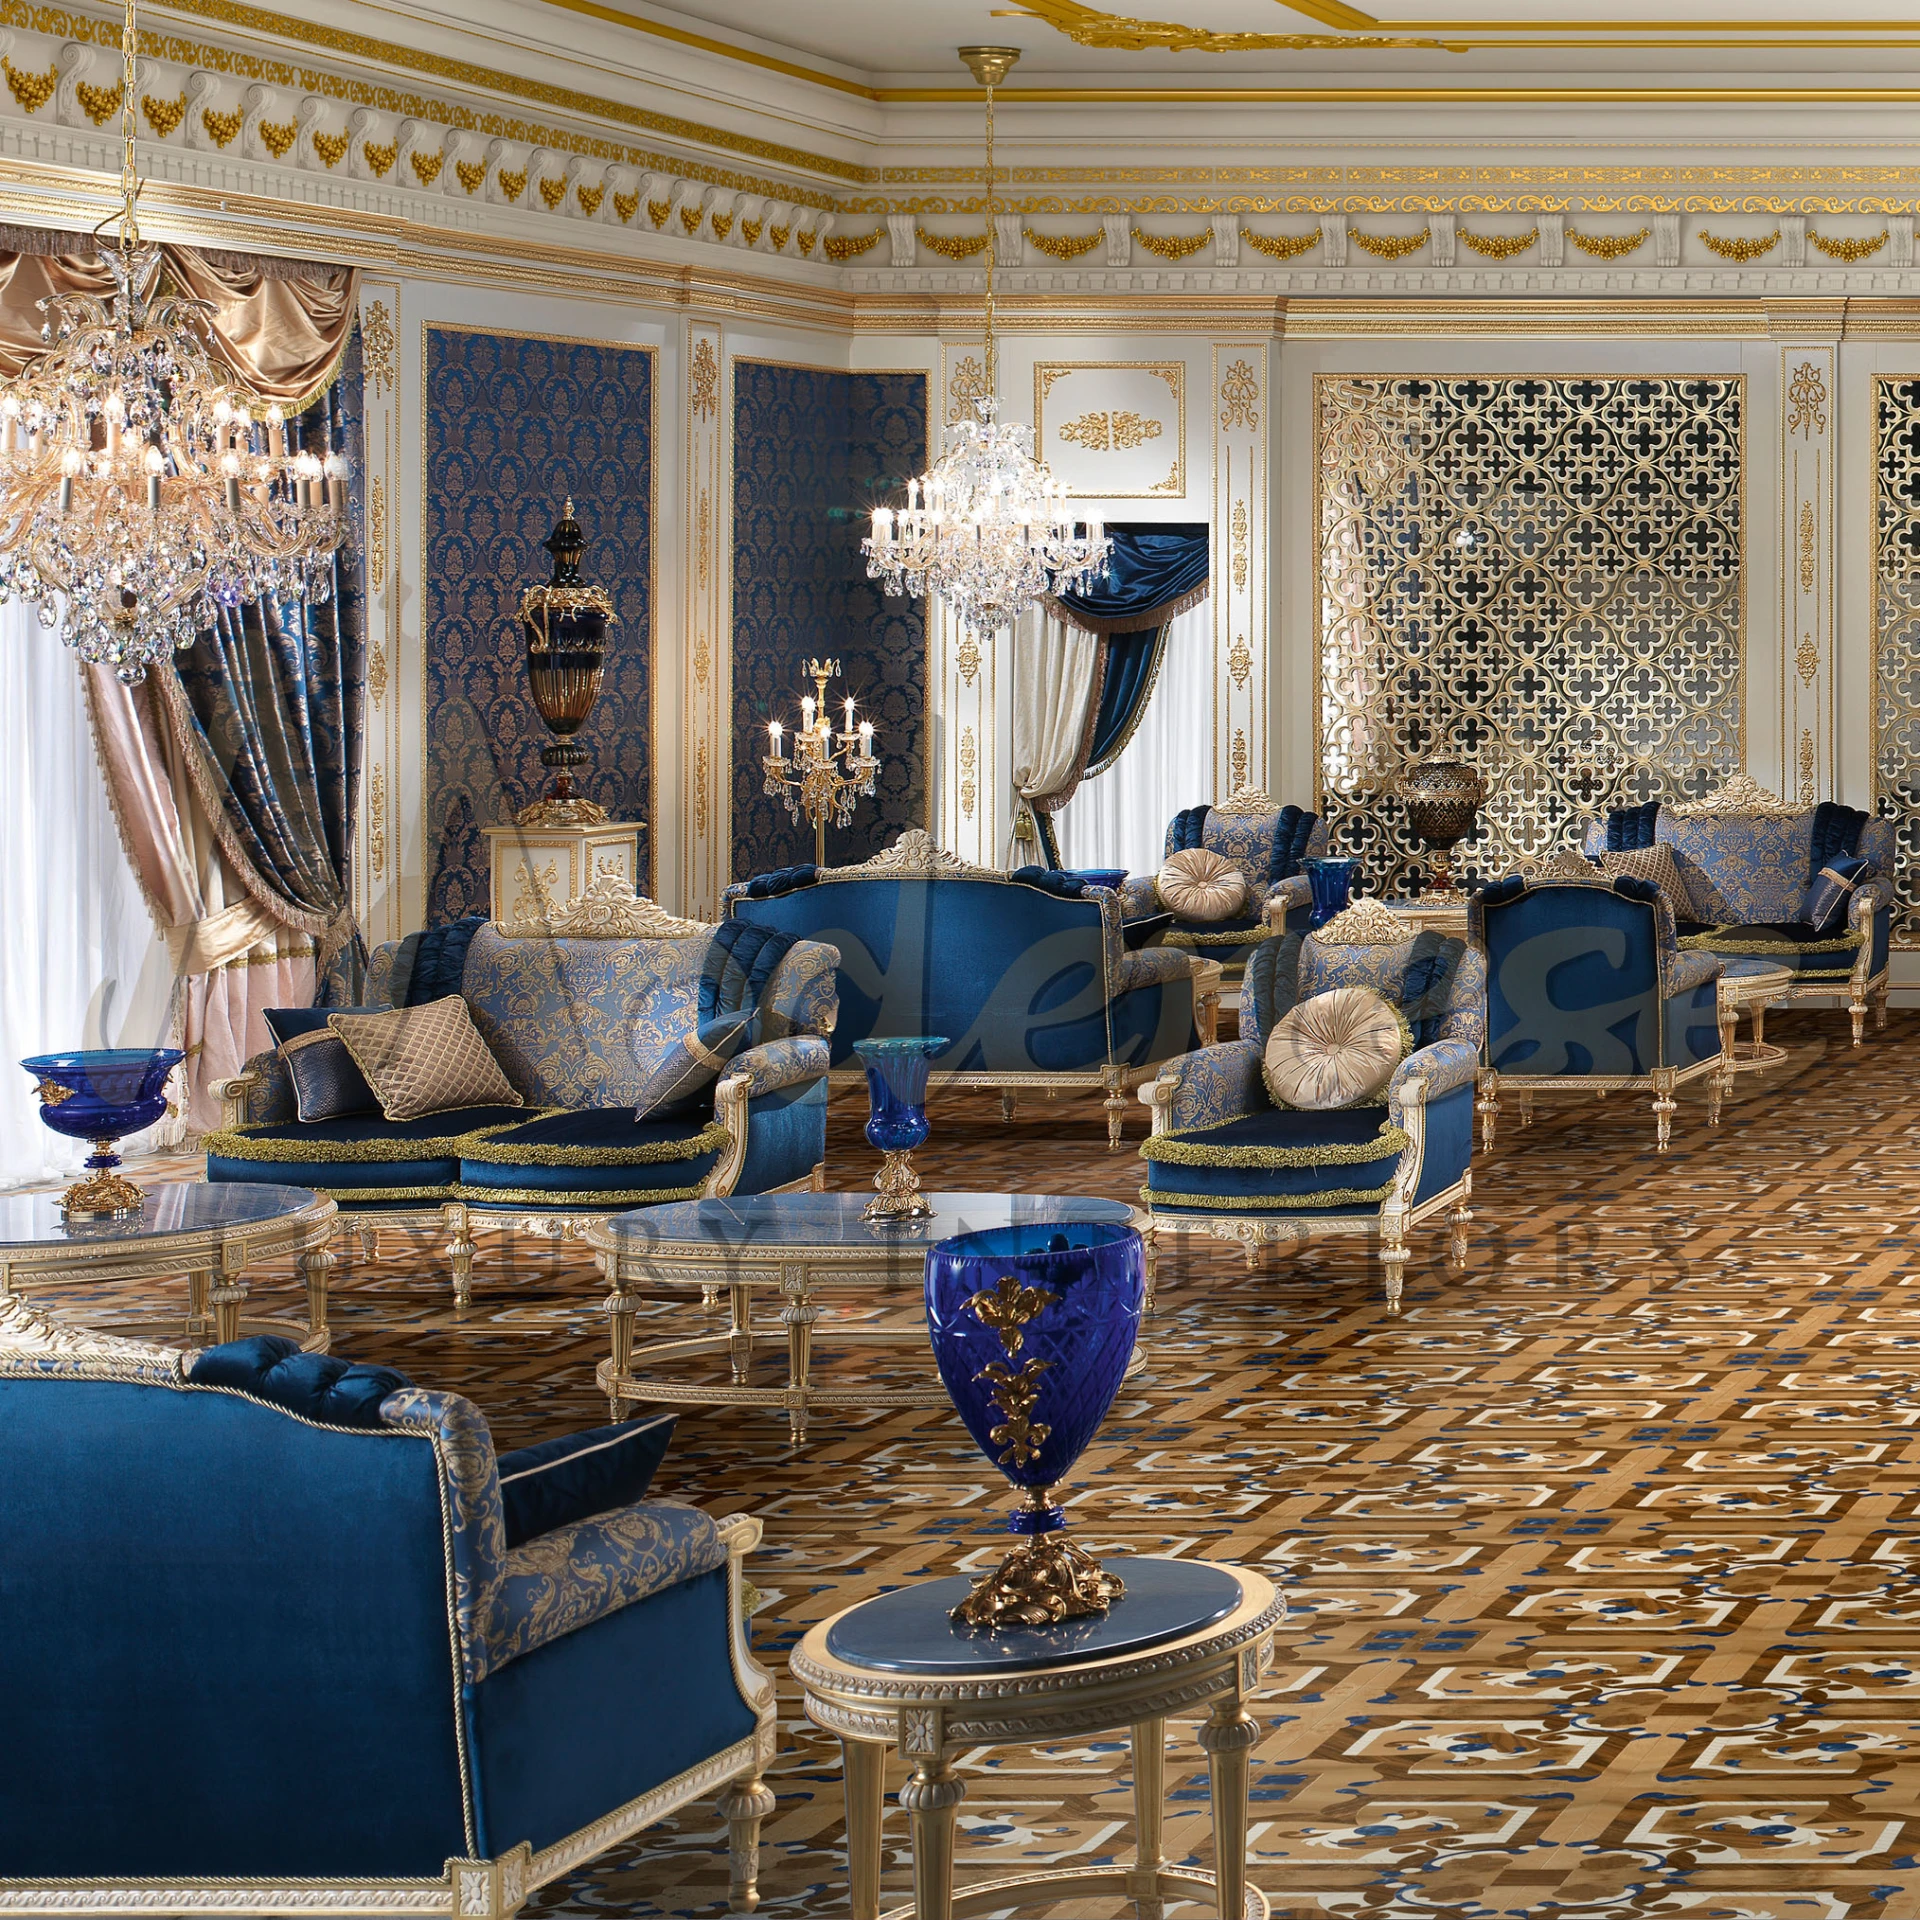 Elegant armchair with rich blue velvet, golden trim, and baroque-style damask design, exuding a regal presence.

